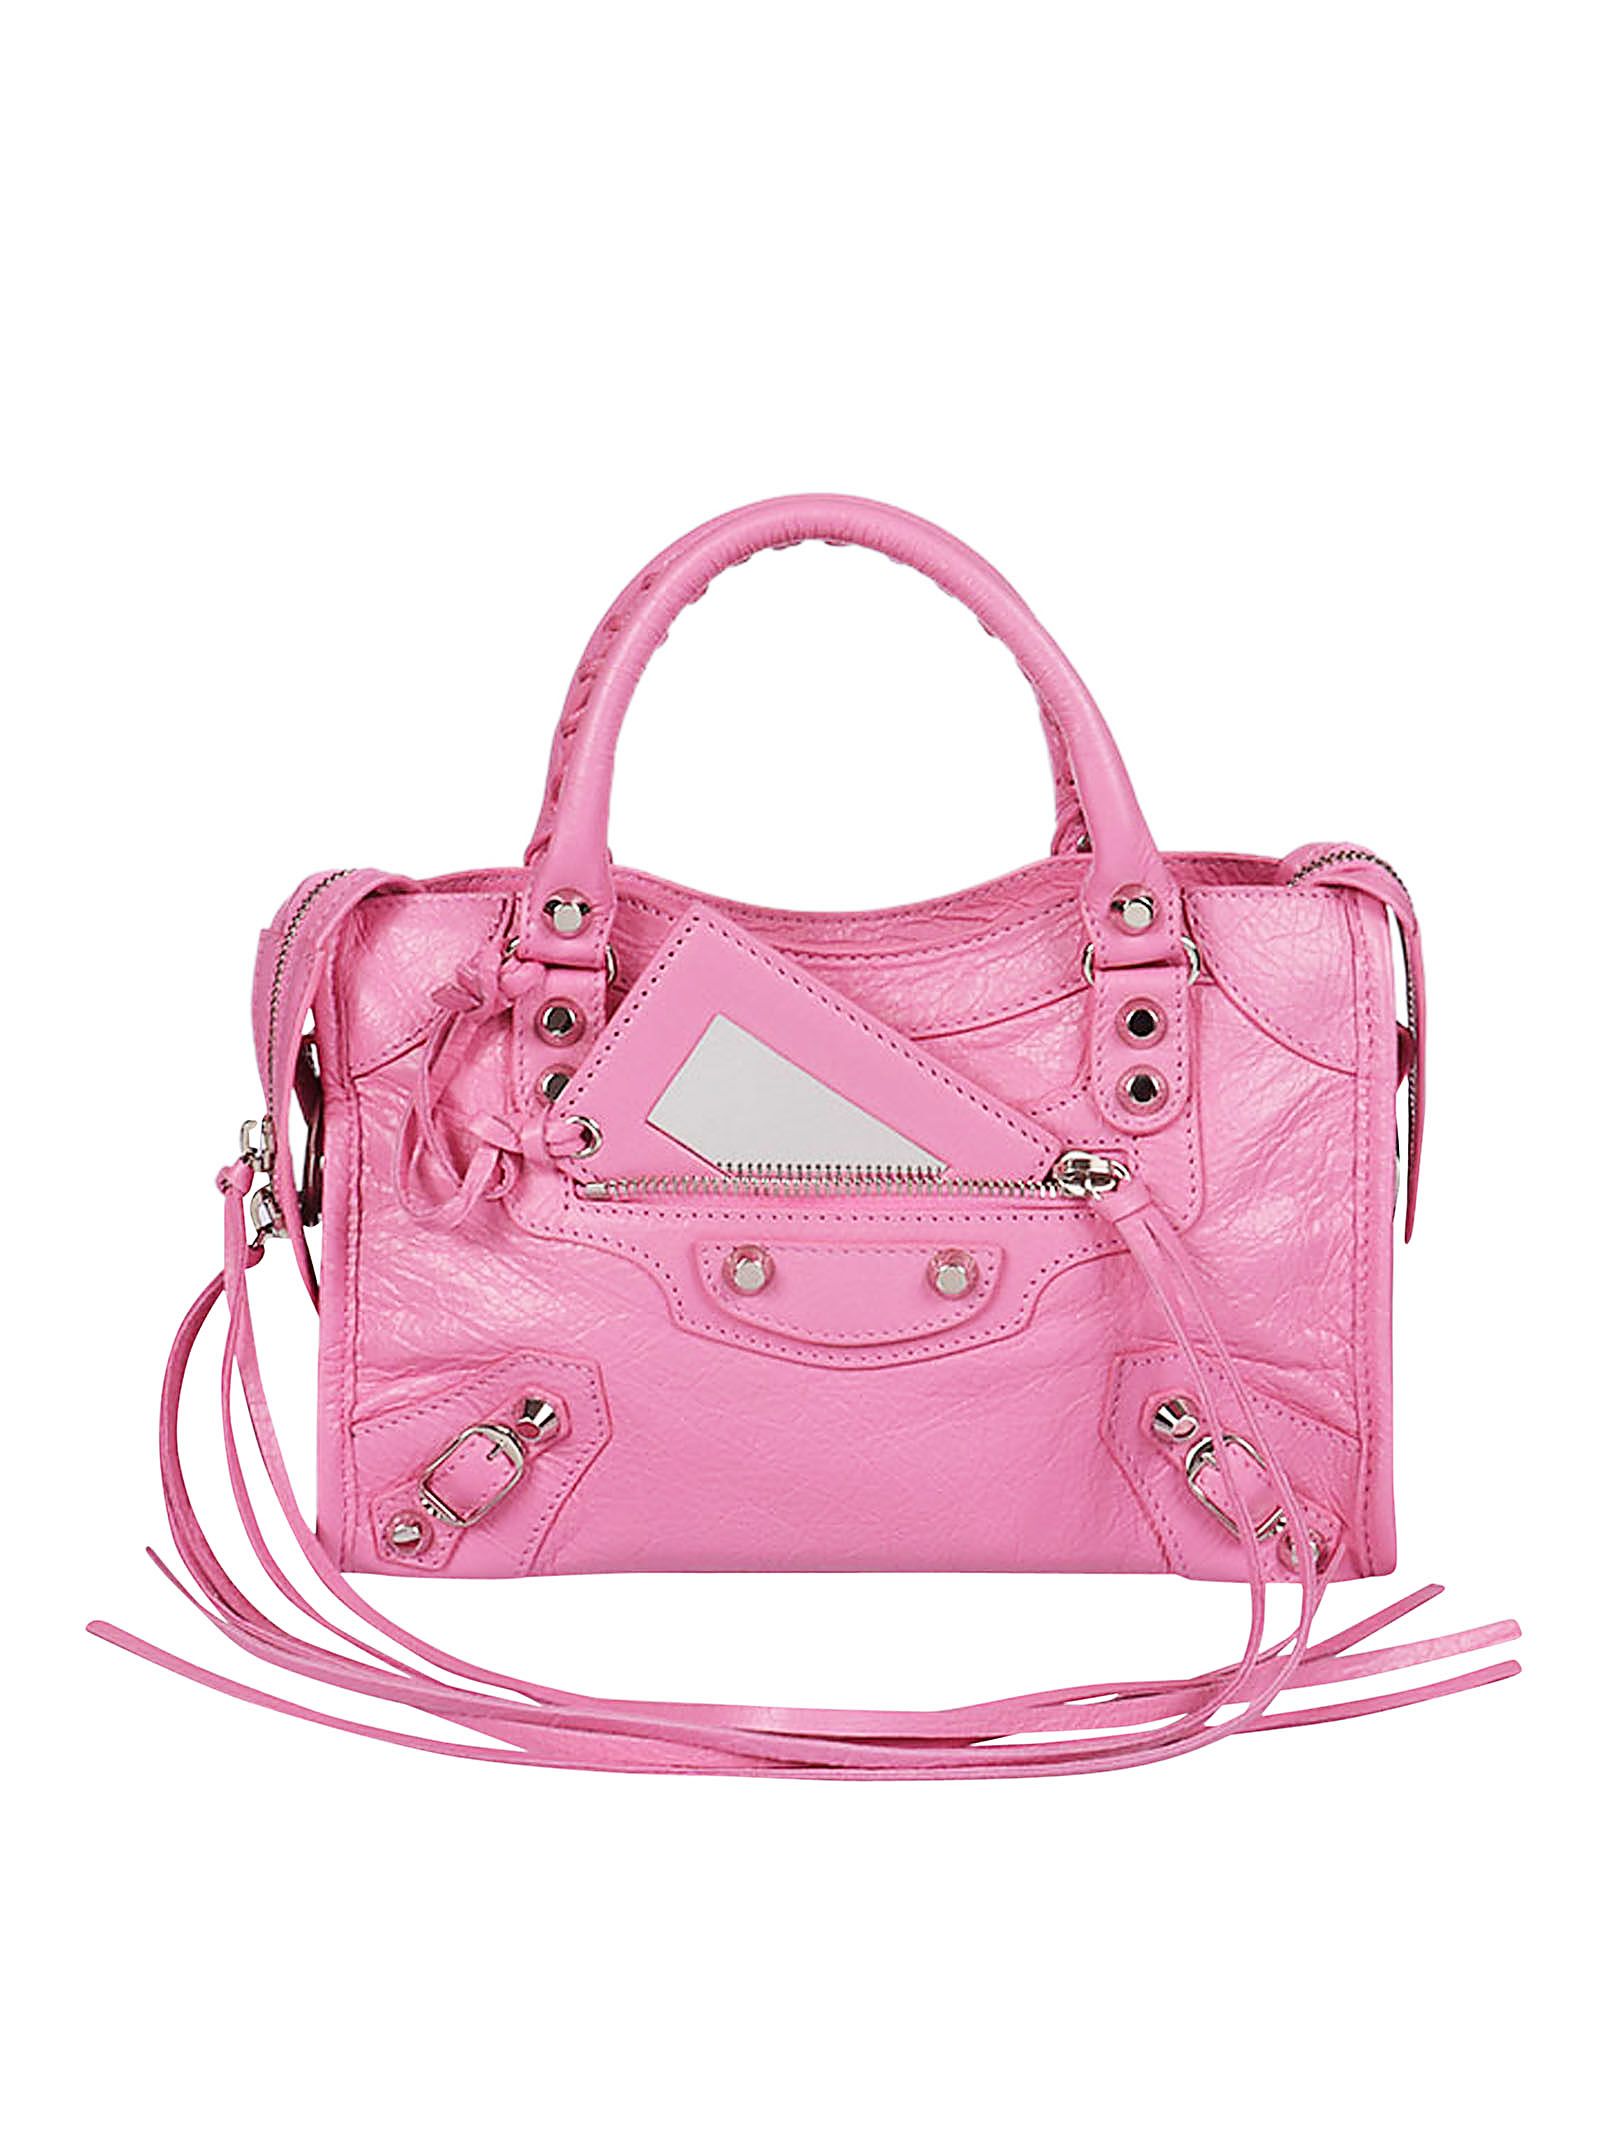 balenciaga bag pink mini